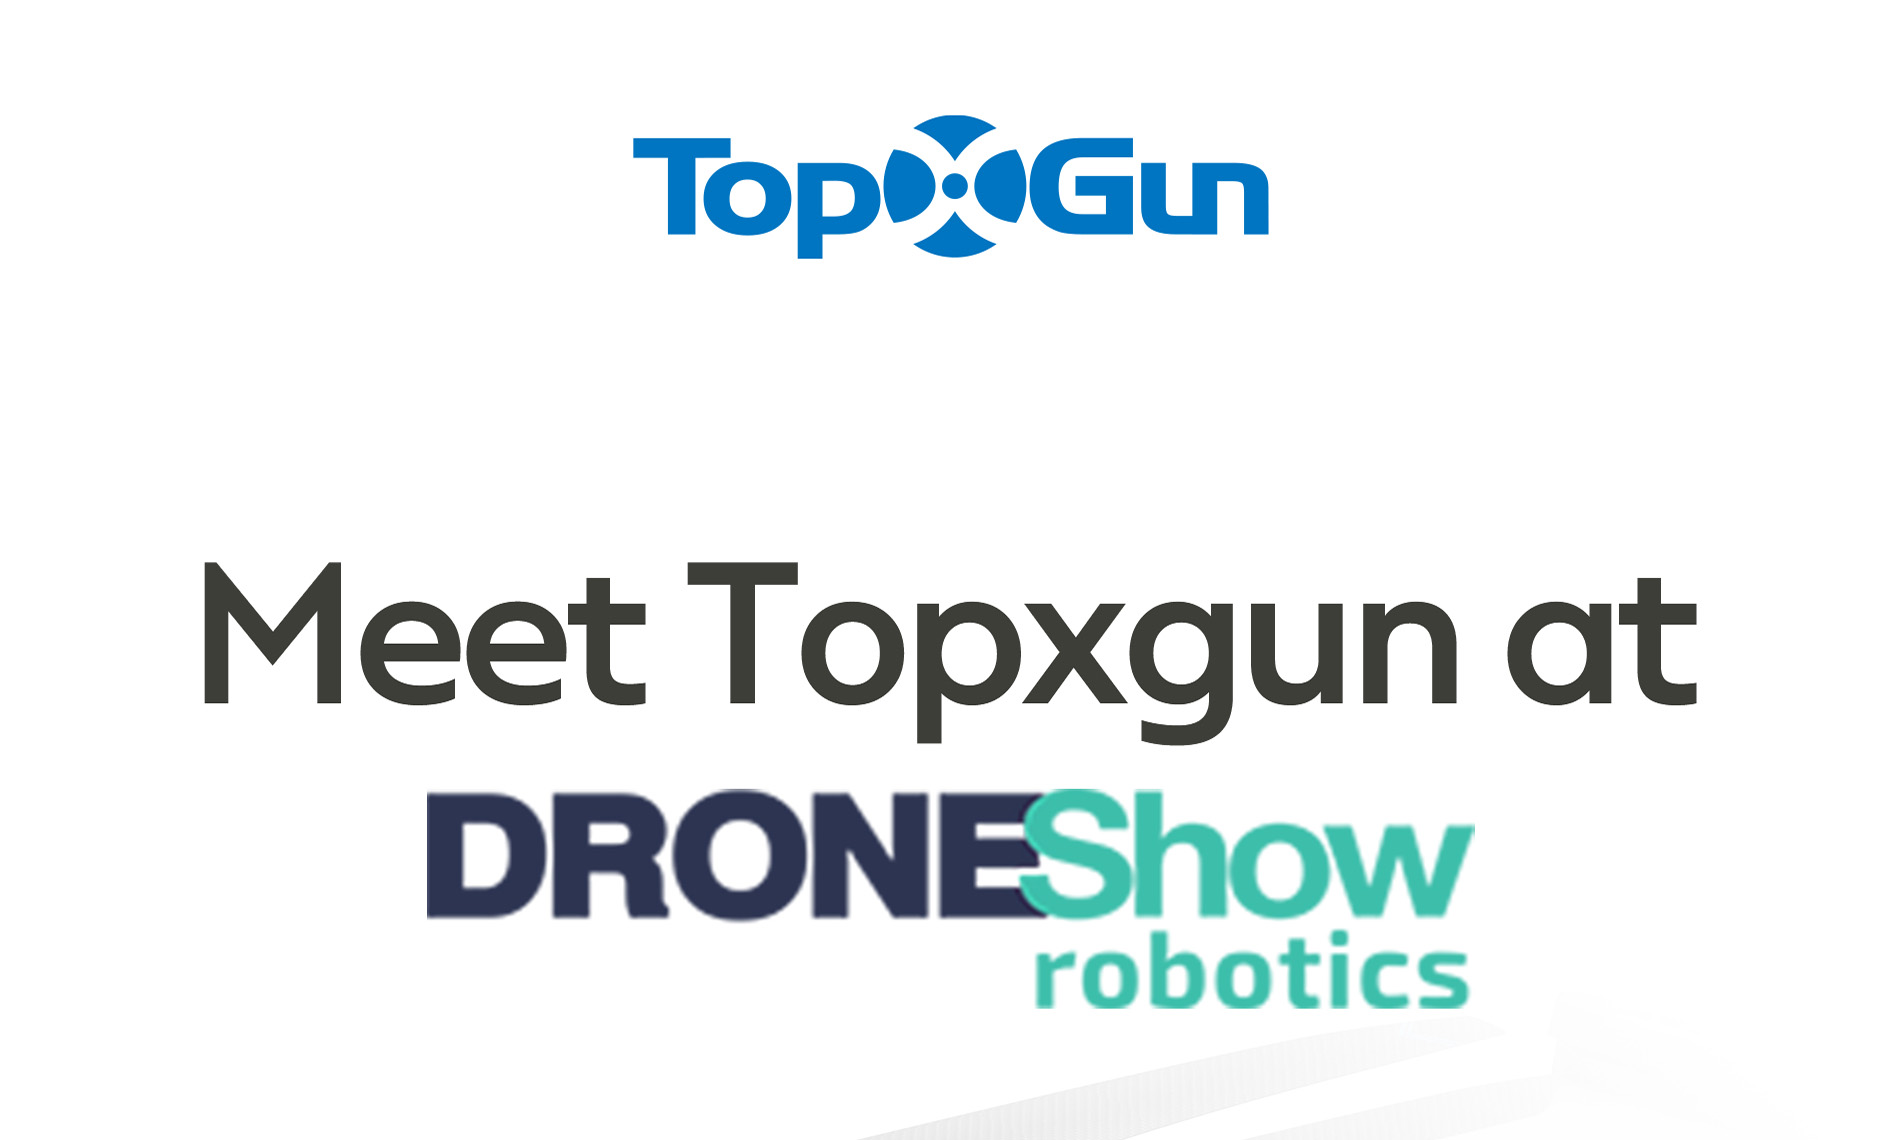 Встречайте Topxgun на DroneShow в Сан-Паулу, Бразилия!